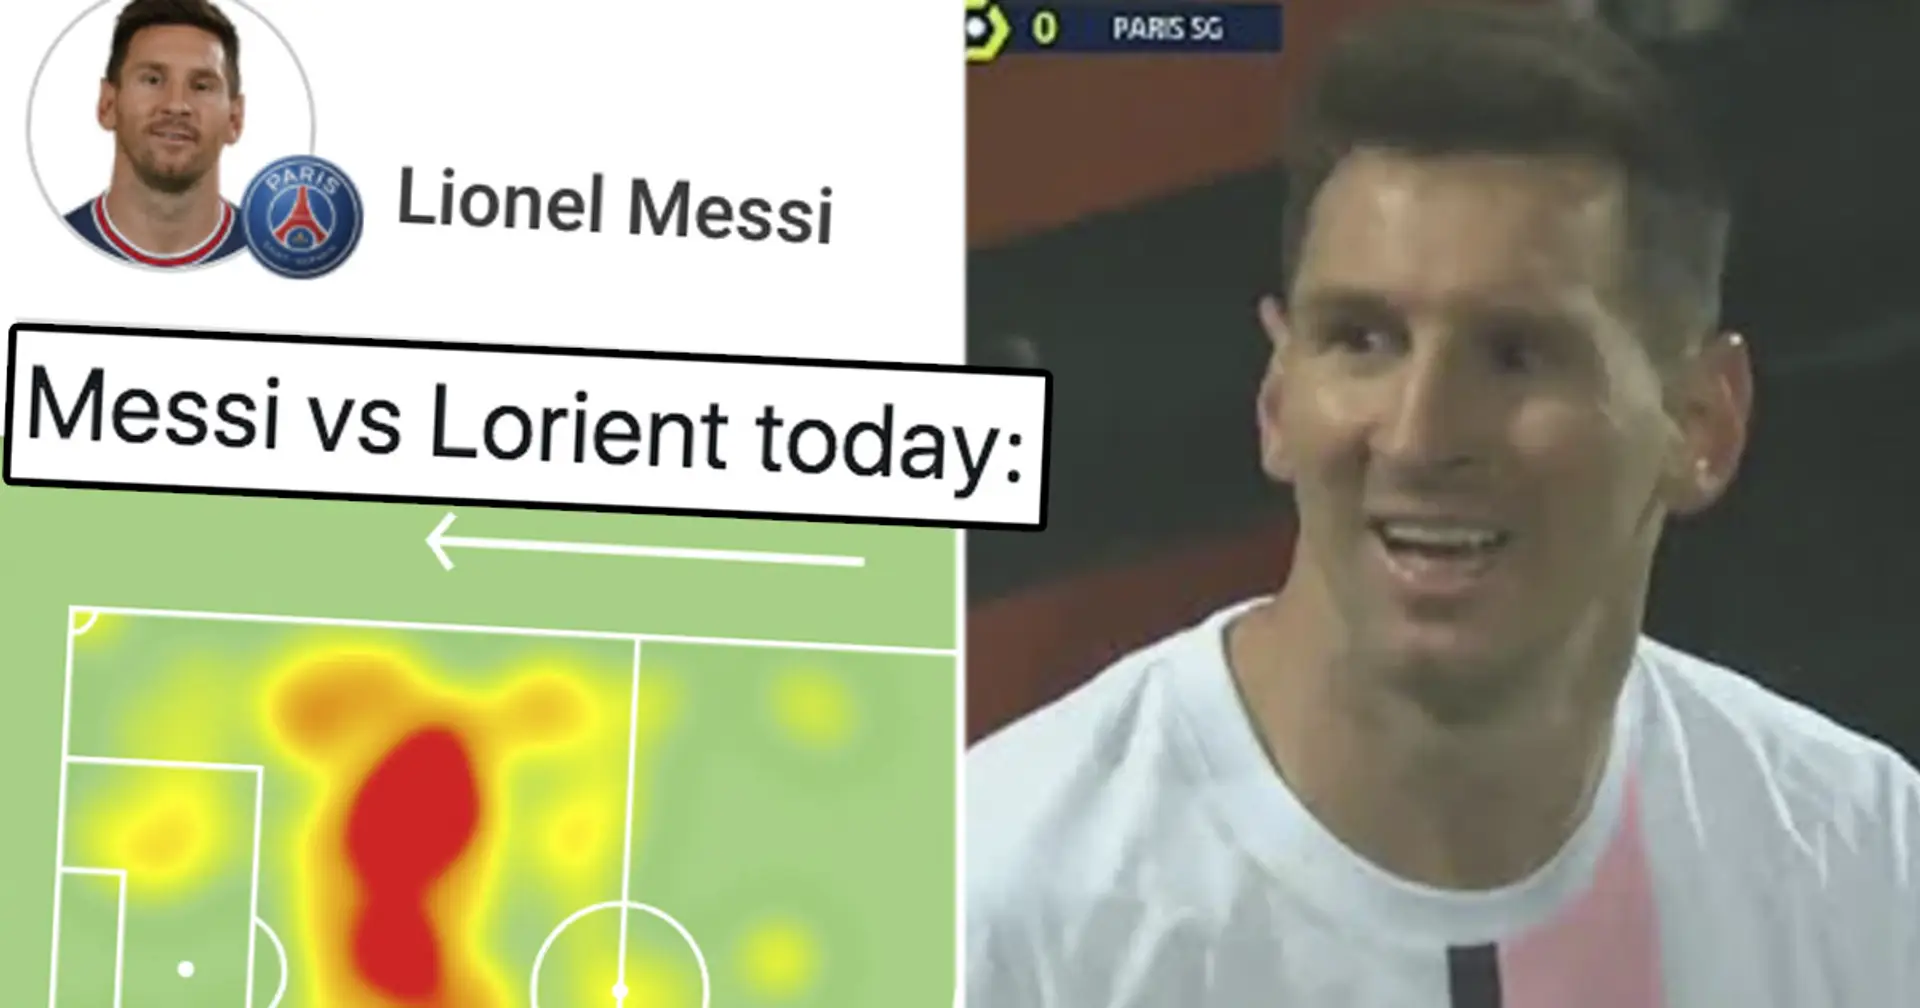 Messi blanks in last PSG game of 2021 but displays 'best performance of season'